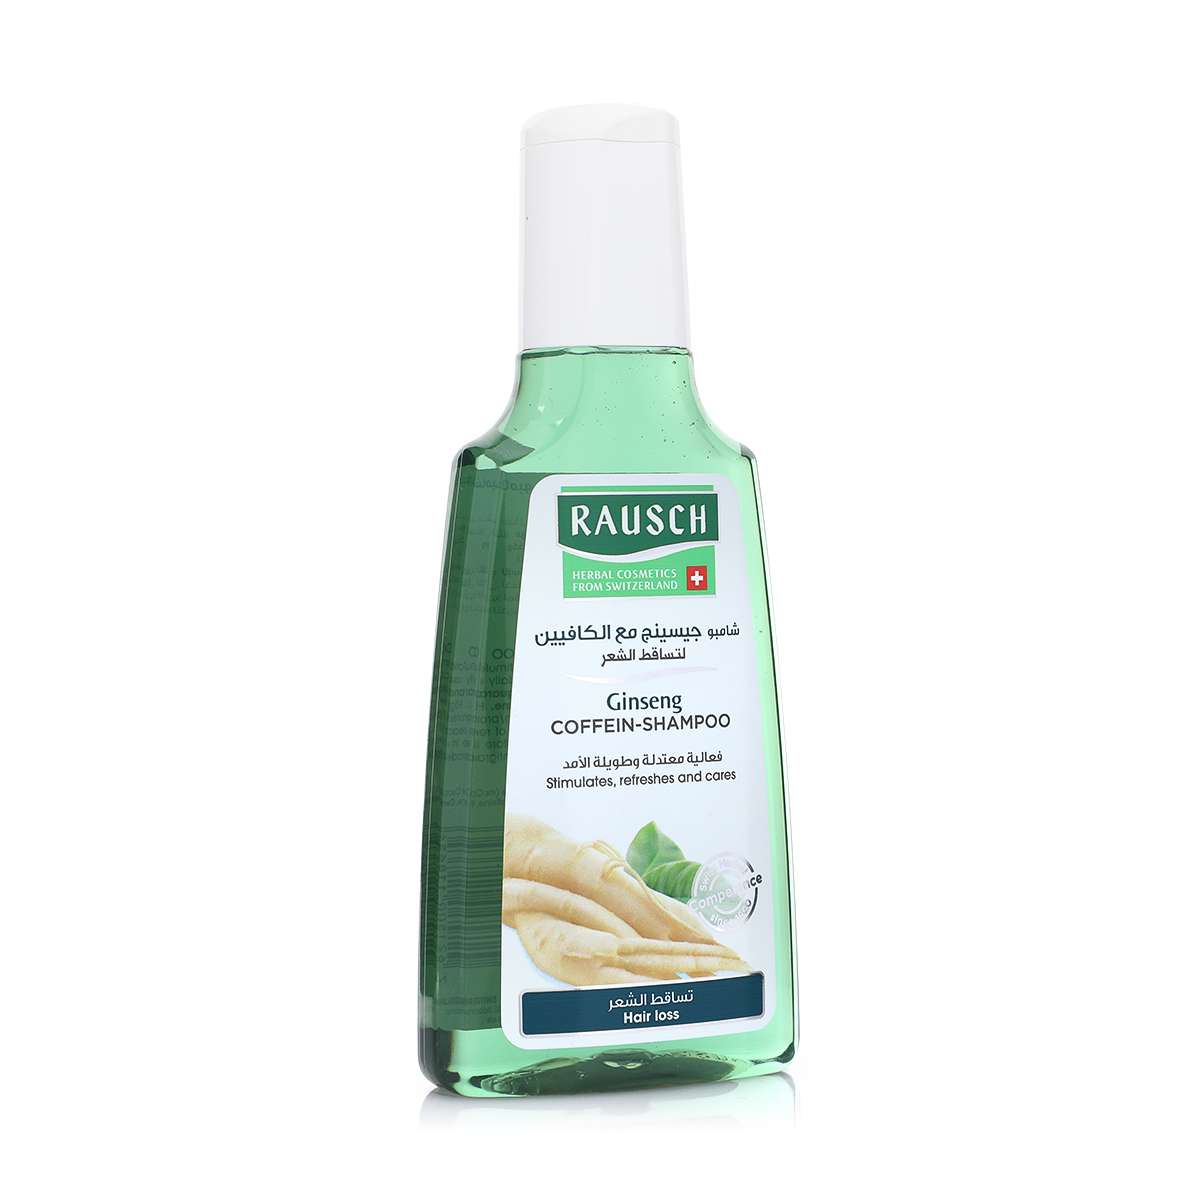 Buy Ginseng Caffeine Hair Loss Shampoo - 200ml Online in Kuwait | Boutiqaat